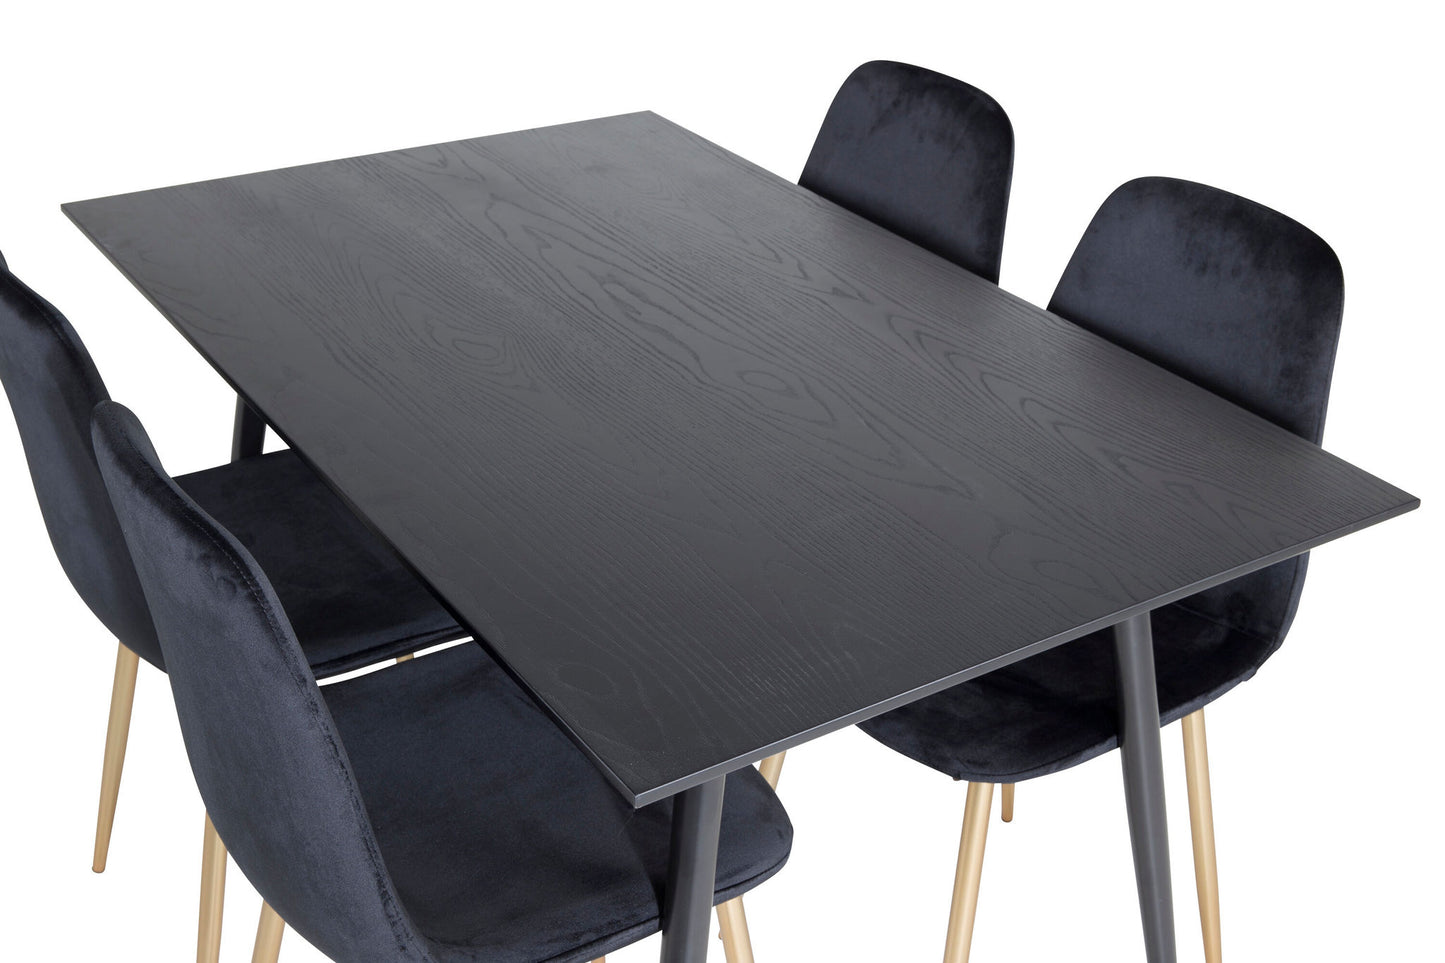 Dipp - Spisebord, 120 cm - Sort finér - Sorte ben m. Messing dipp+ Polar Spisebordsstol - Sort / Messing